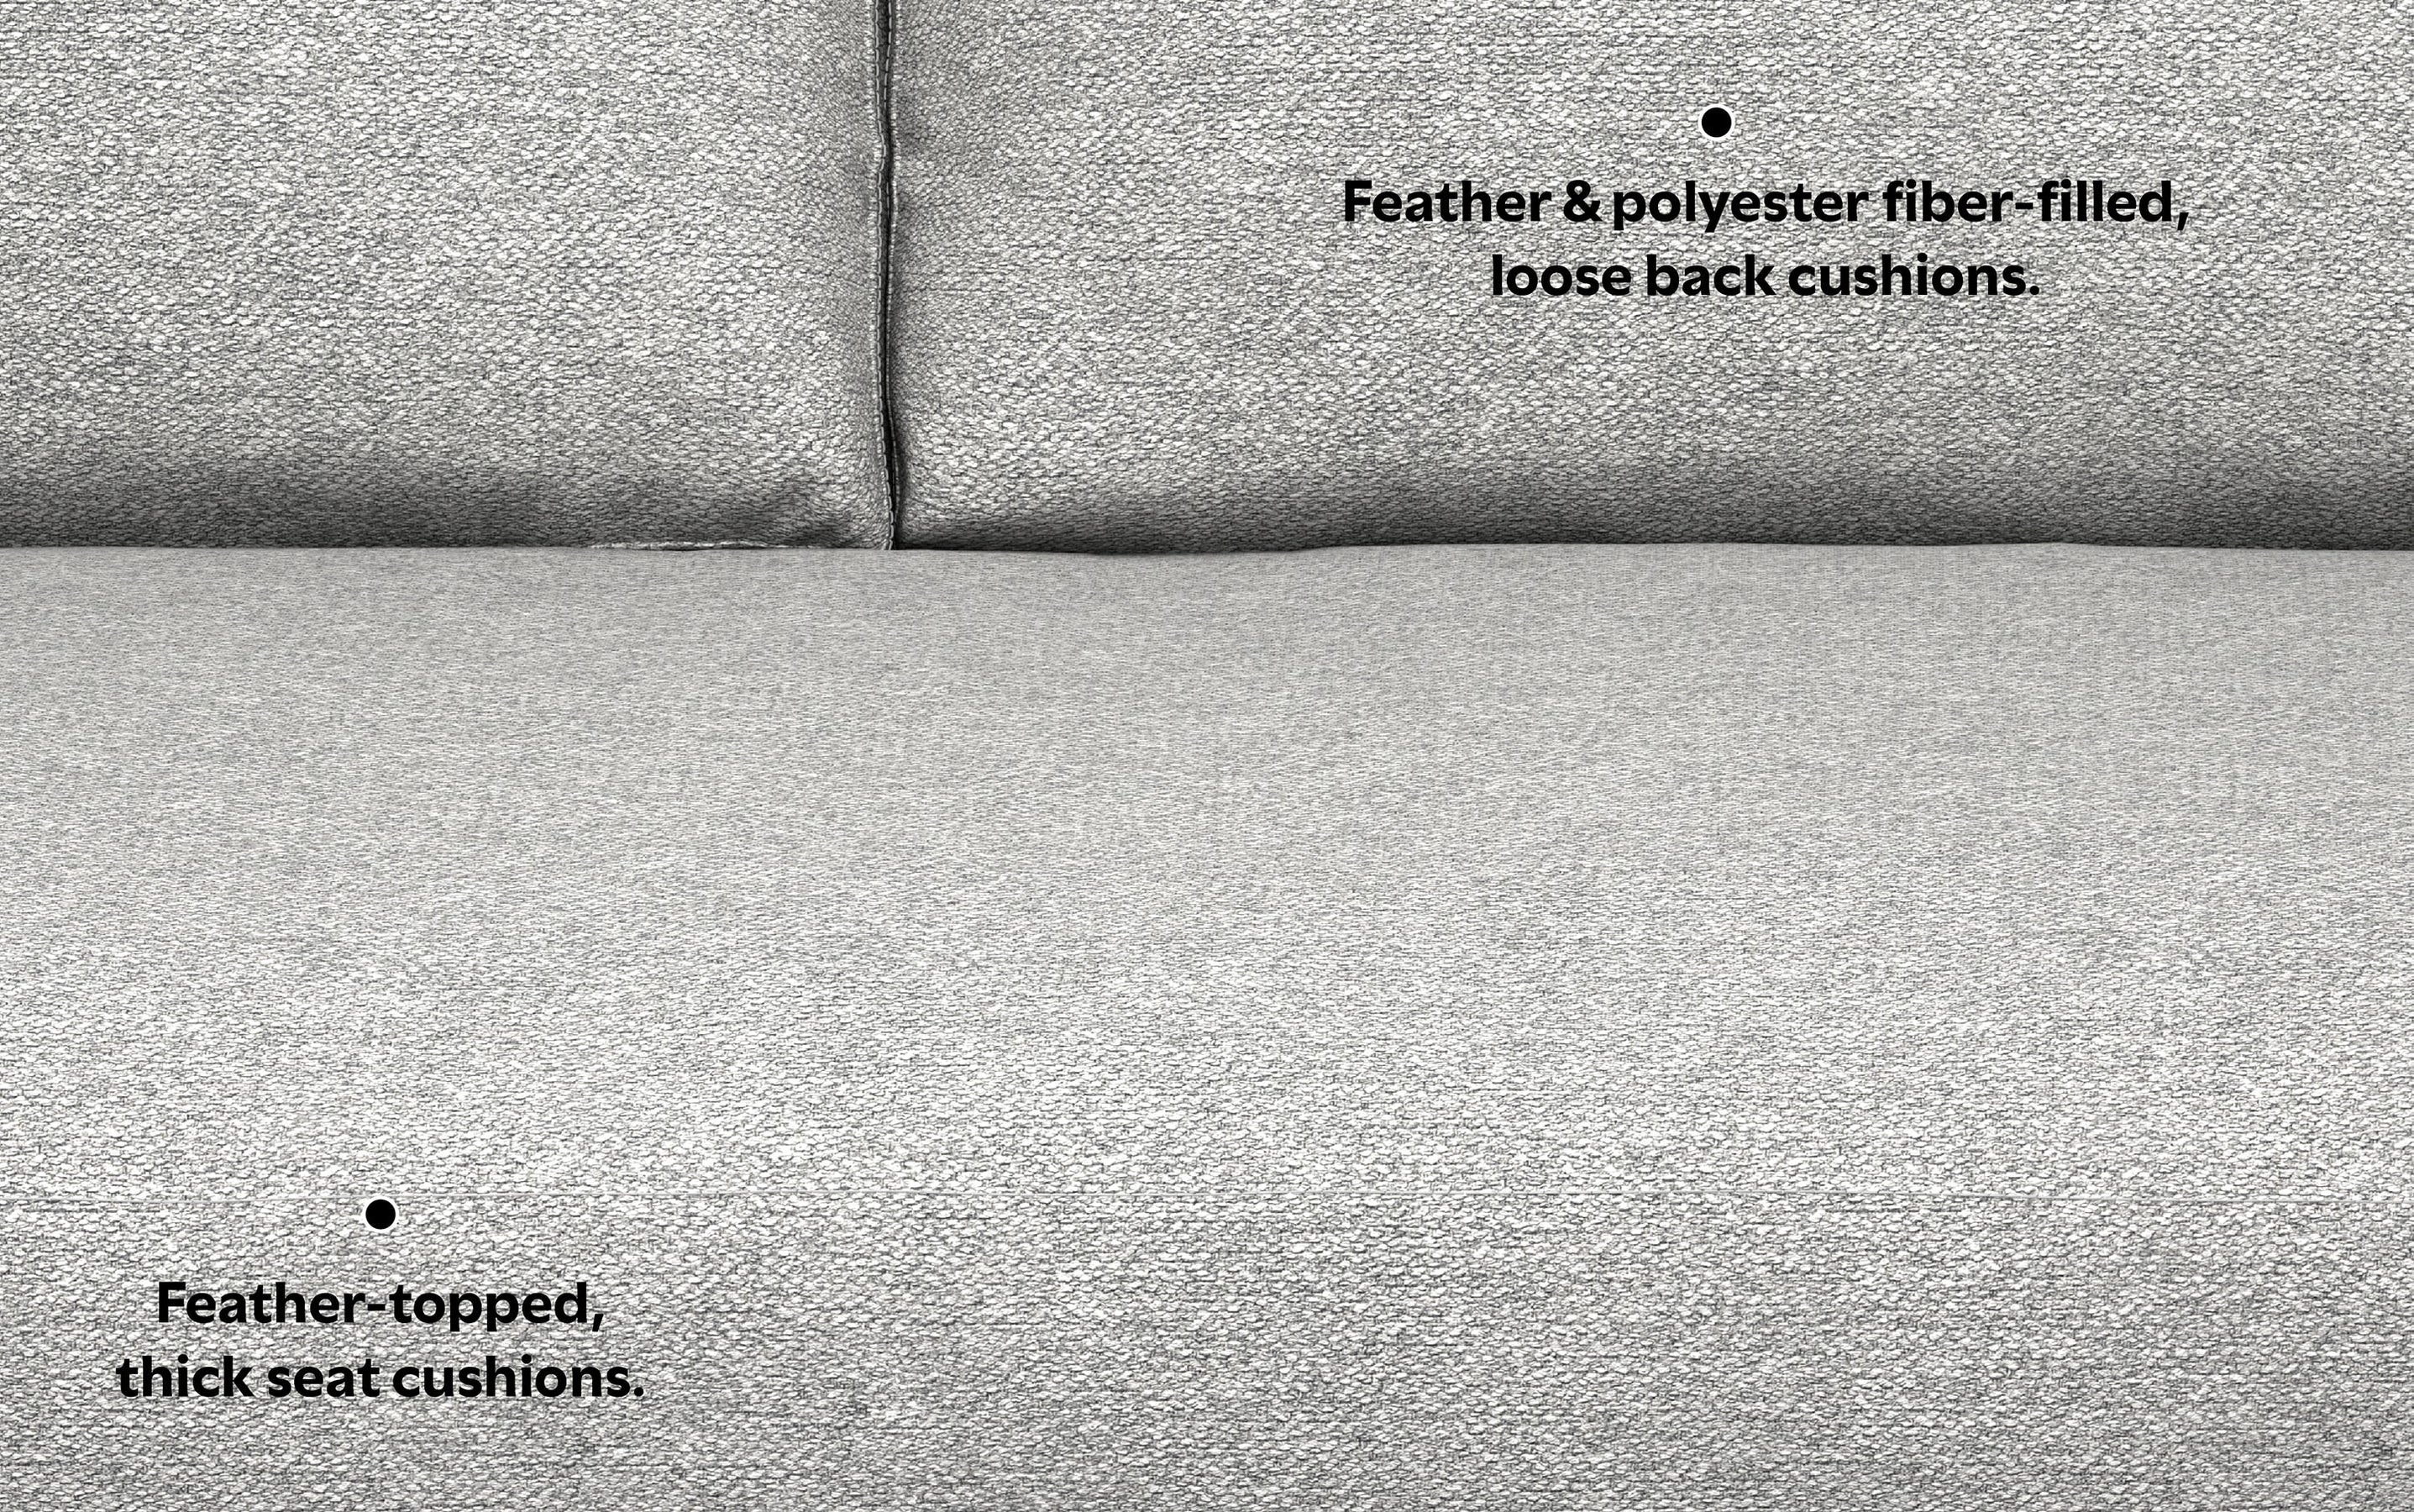 Mist Grey Woven Polyester Fabric | Morrison 88.5 inch Mid Century Sofa